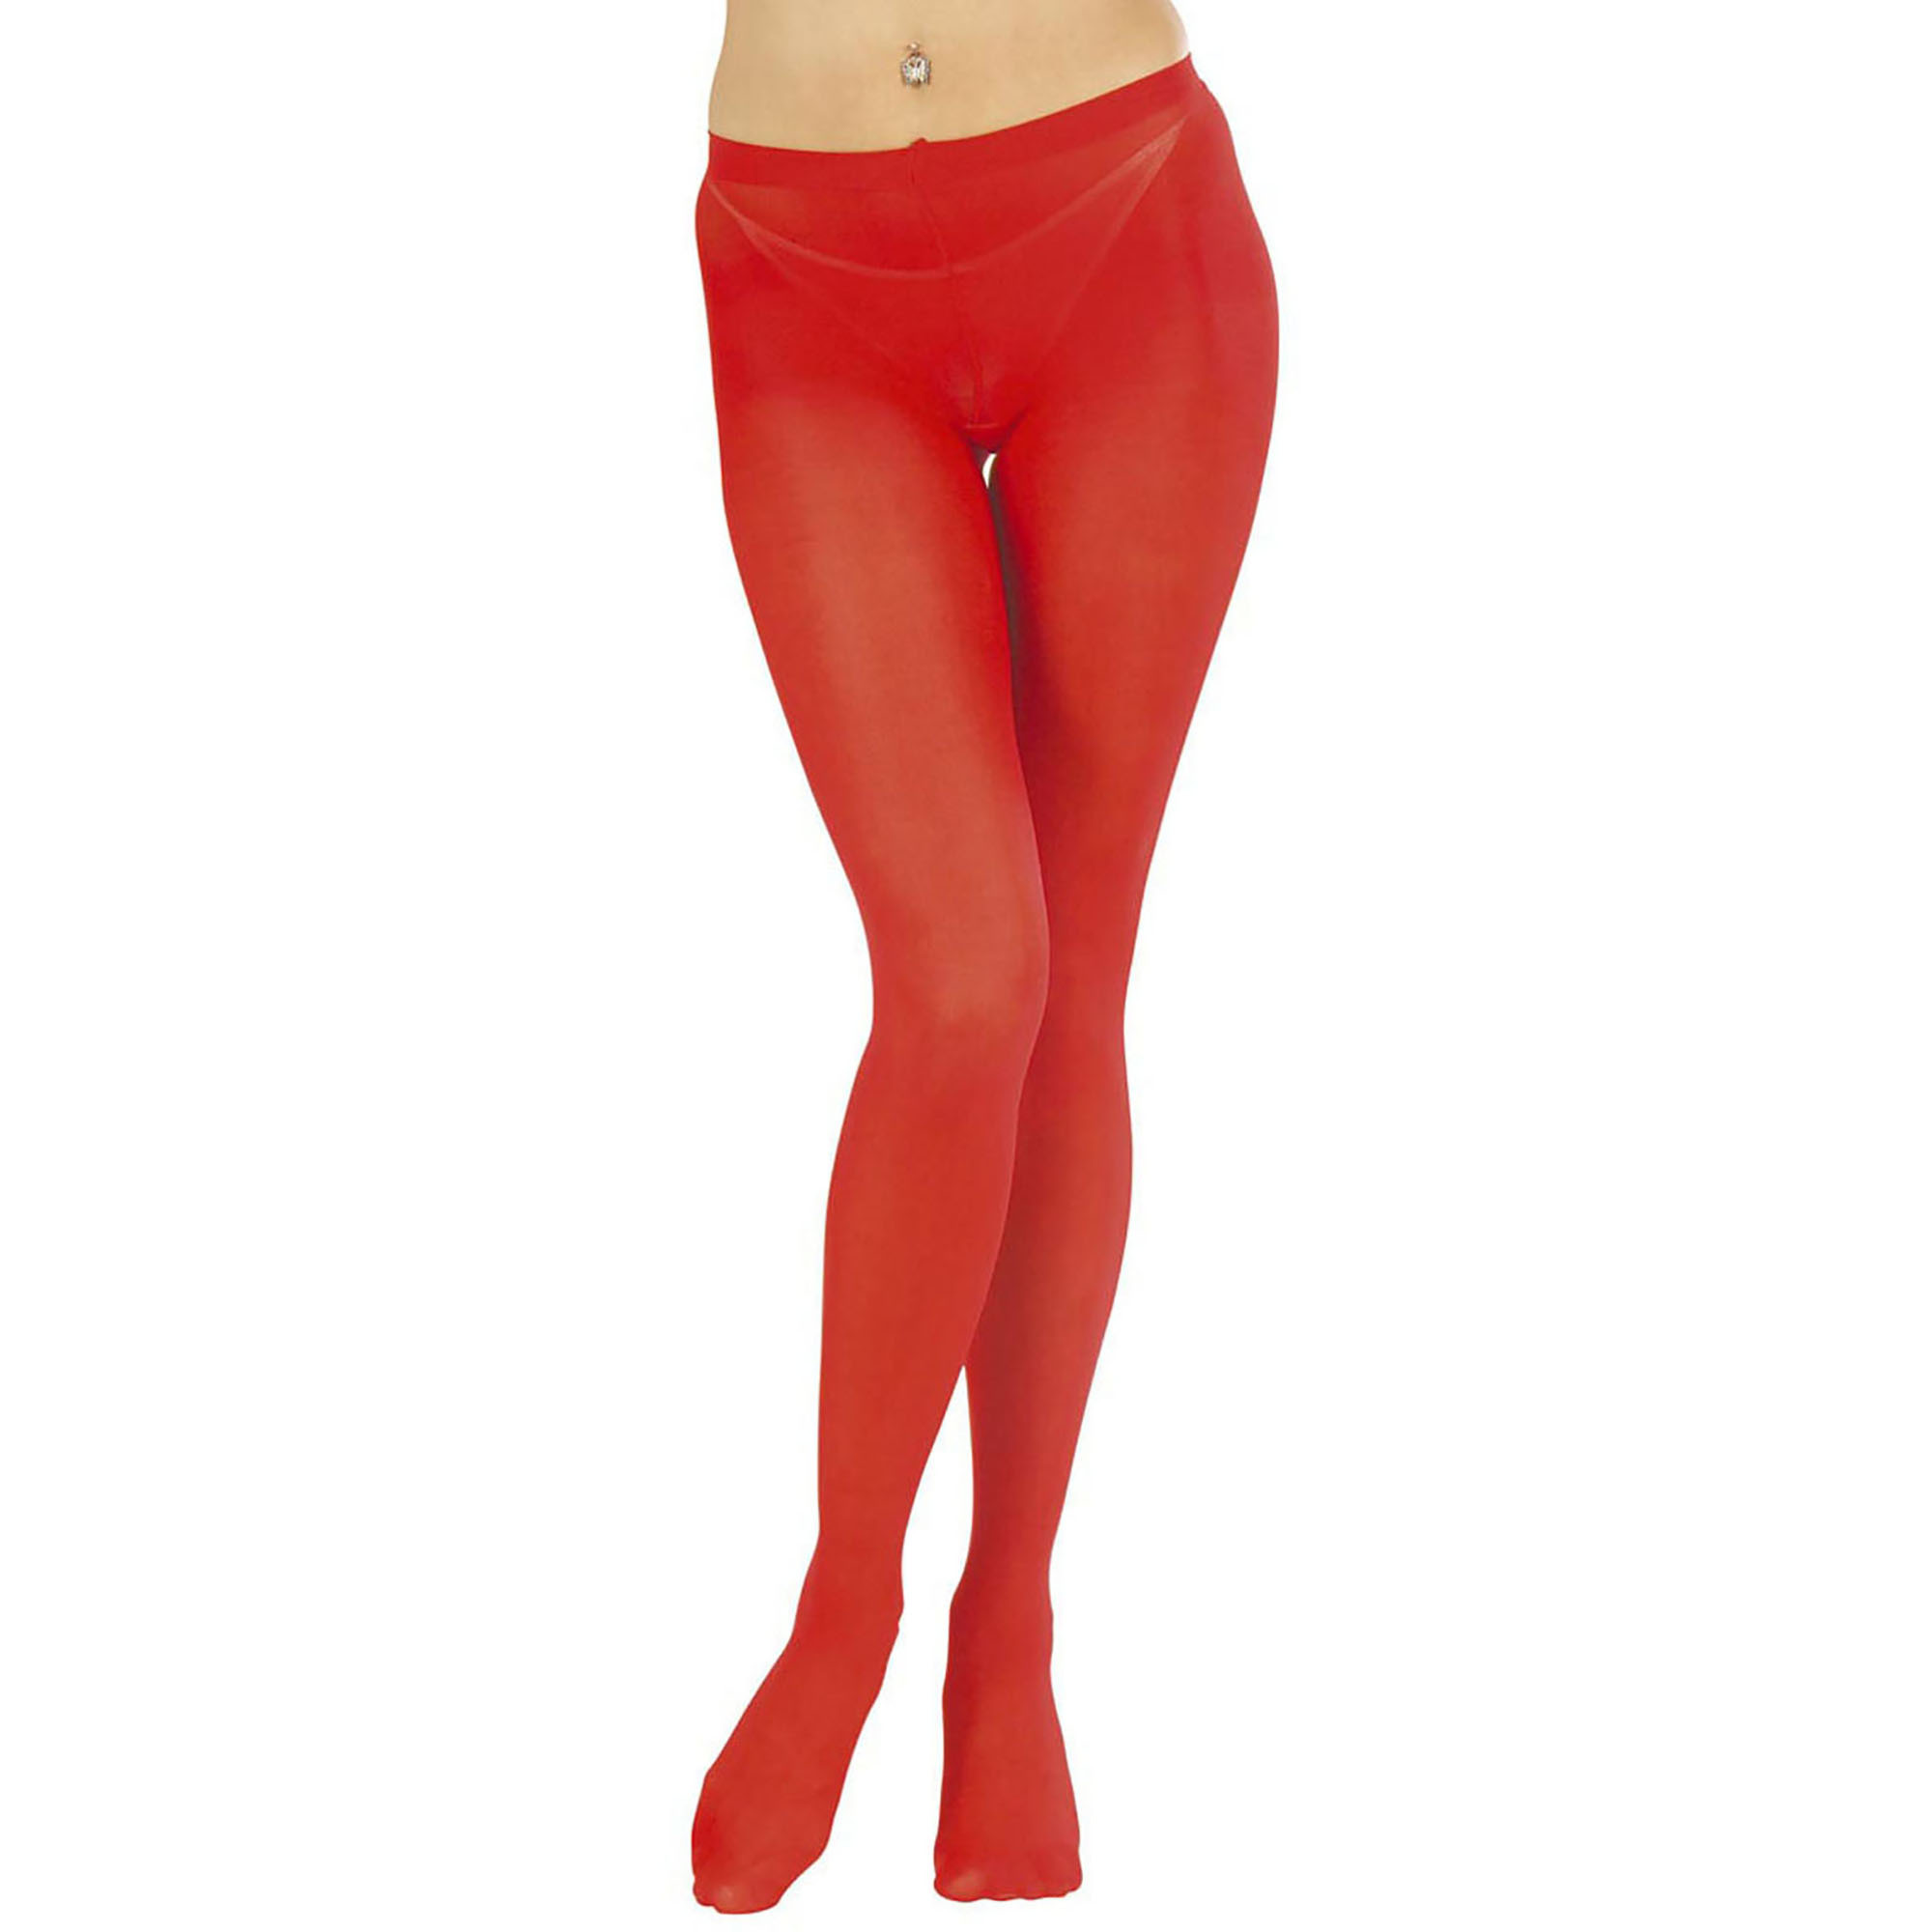 Panty rood XL